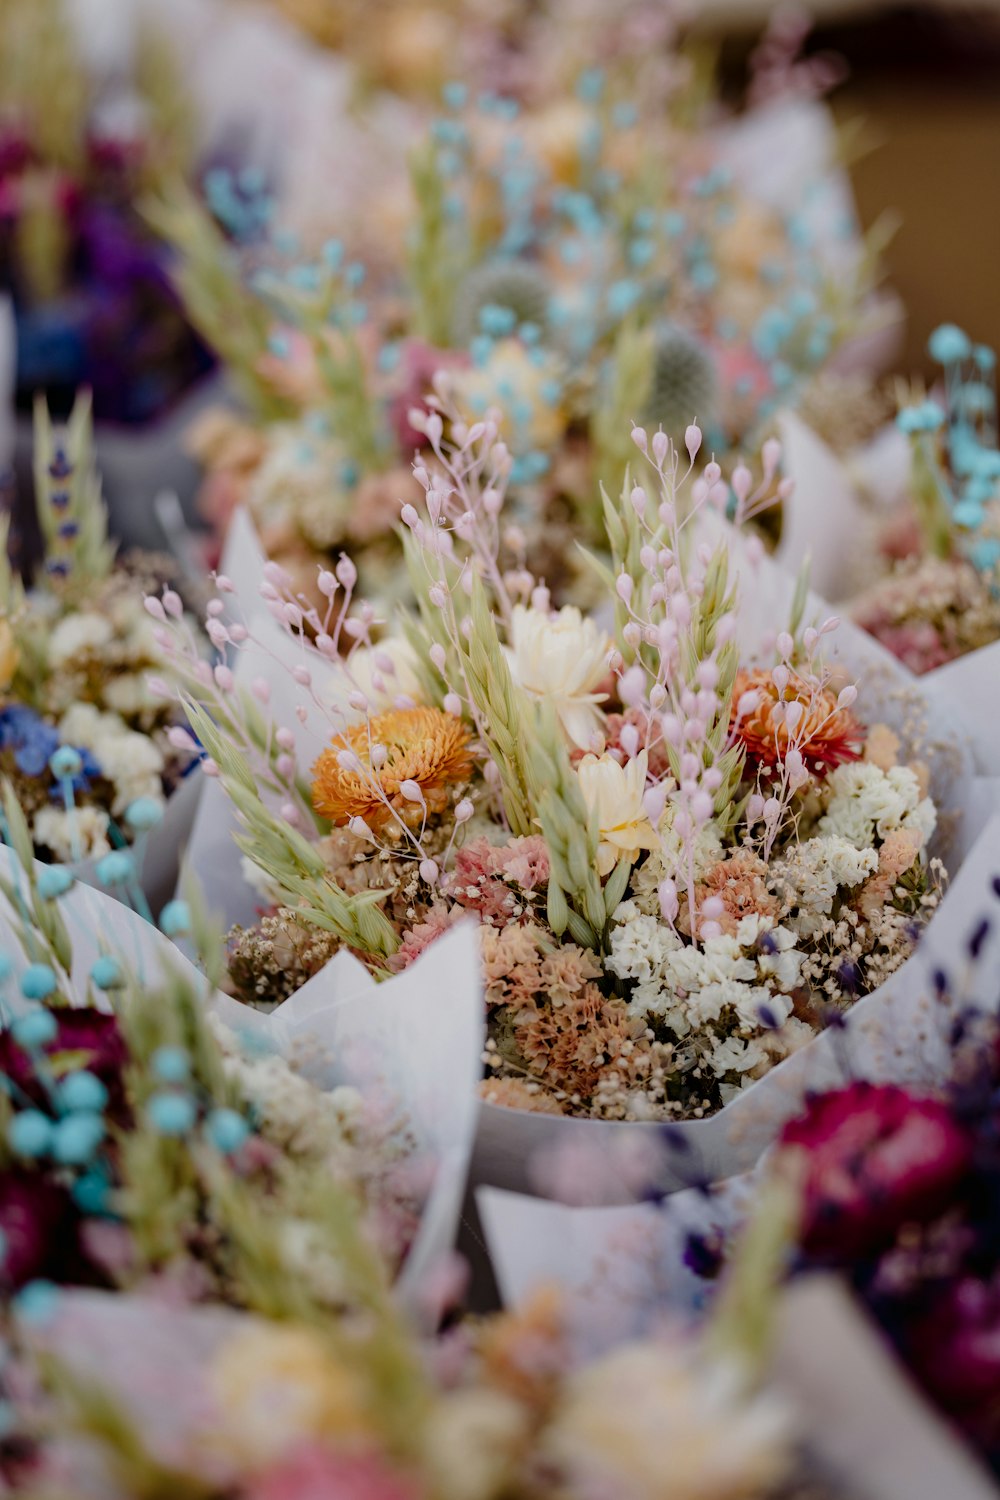 1K+ Dry Flower Pictures  Download Free Images on Unsplash